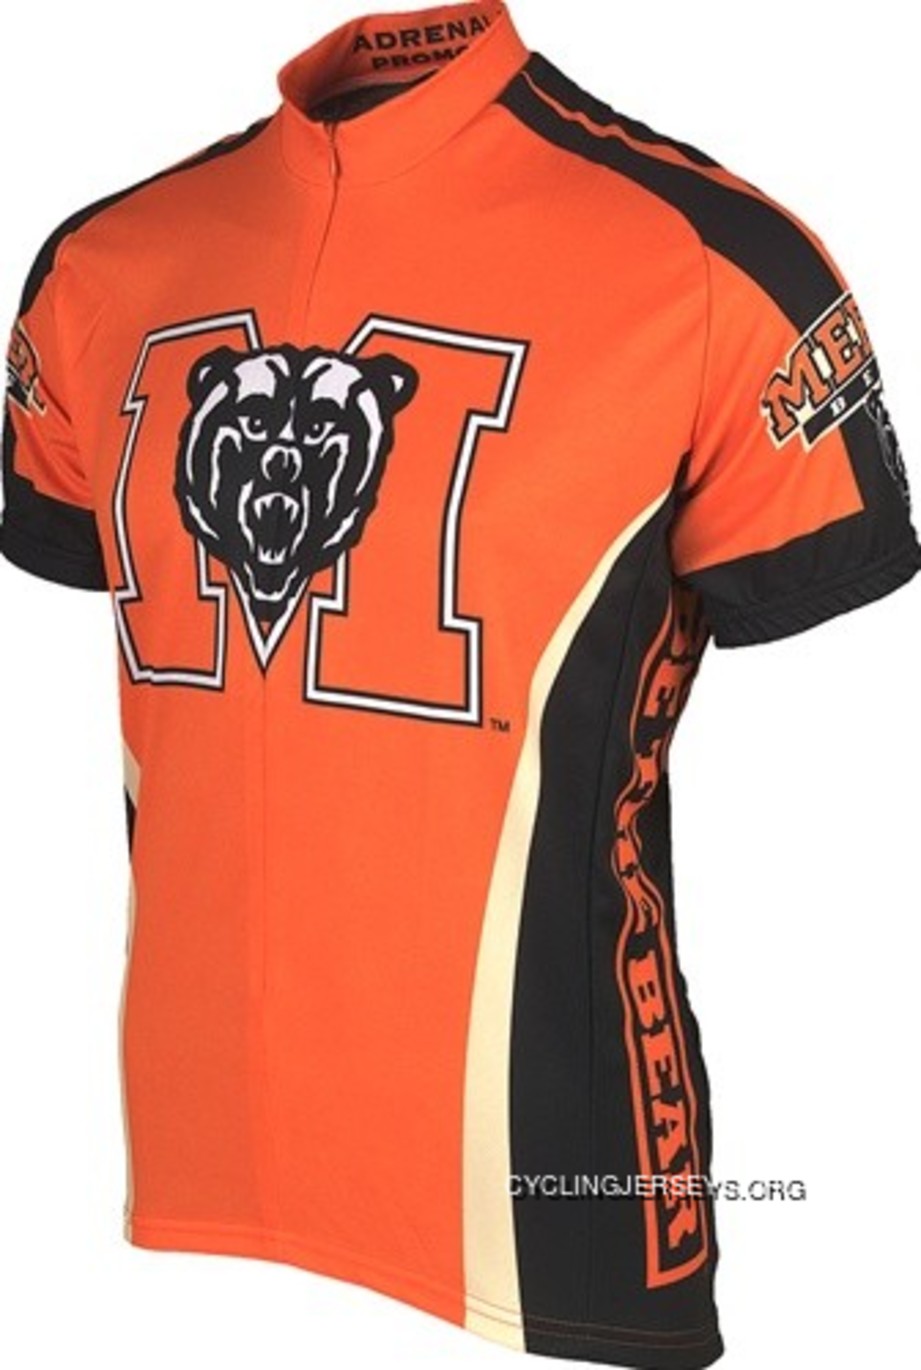 Mercer University University Cycling Short Sleeve Jersey Best